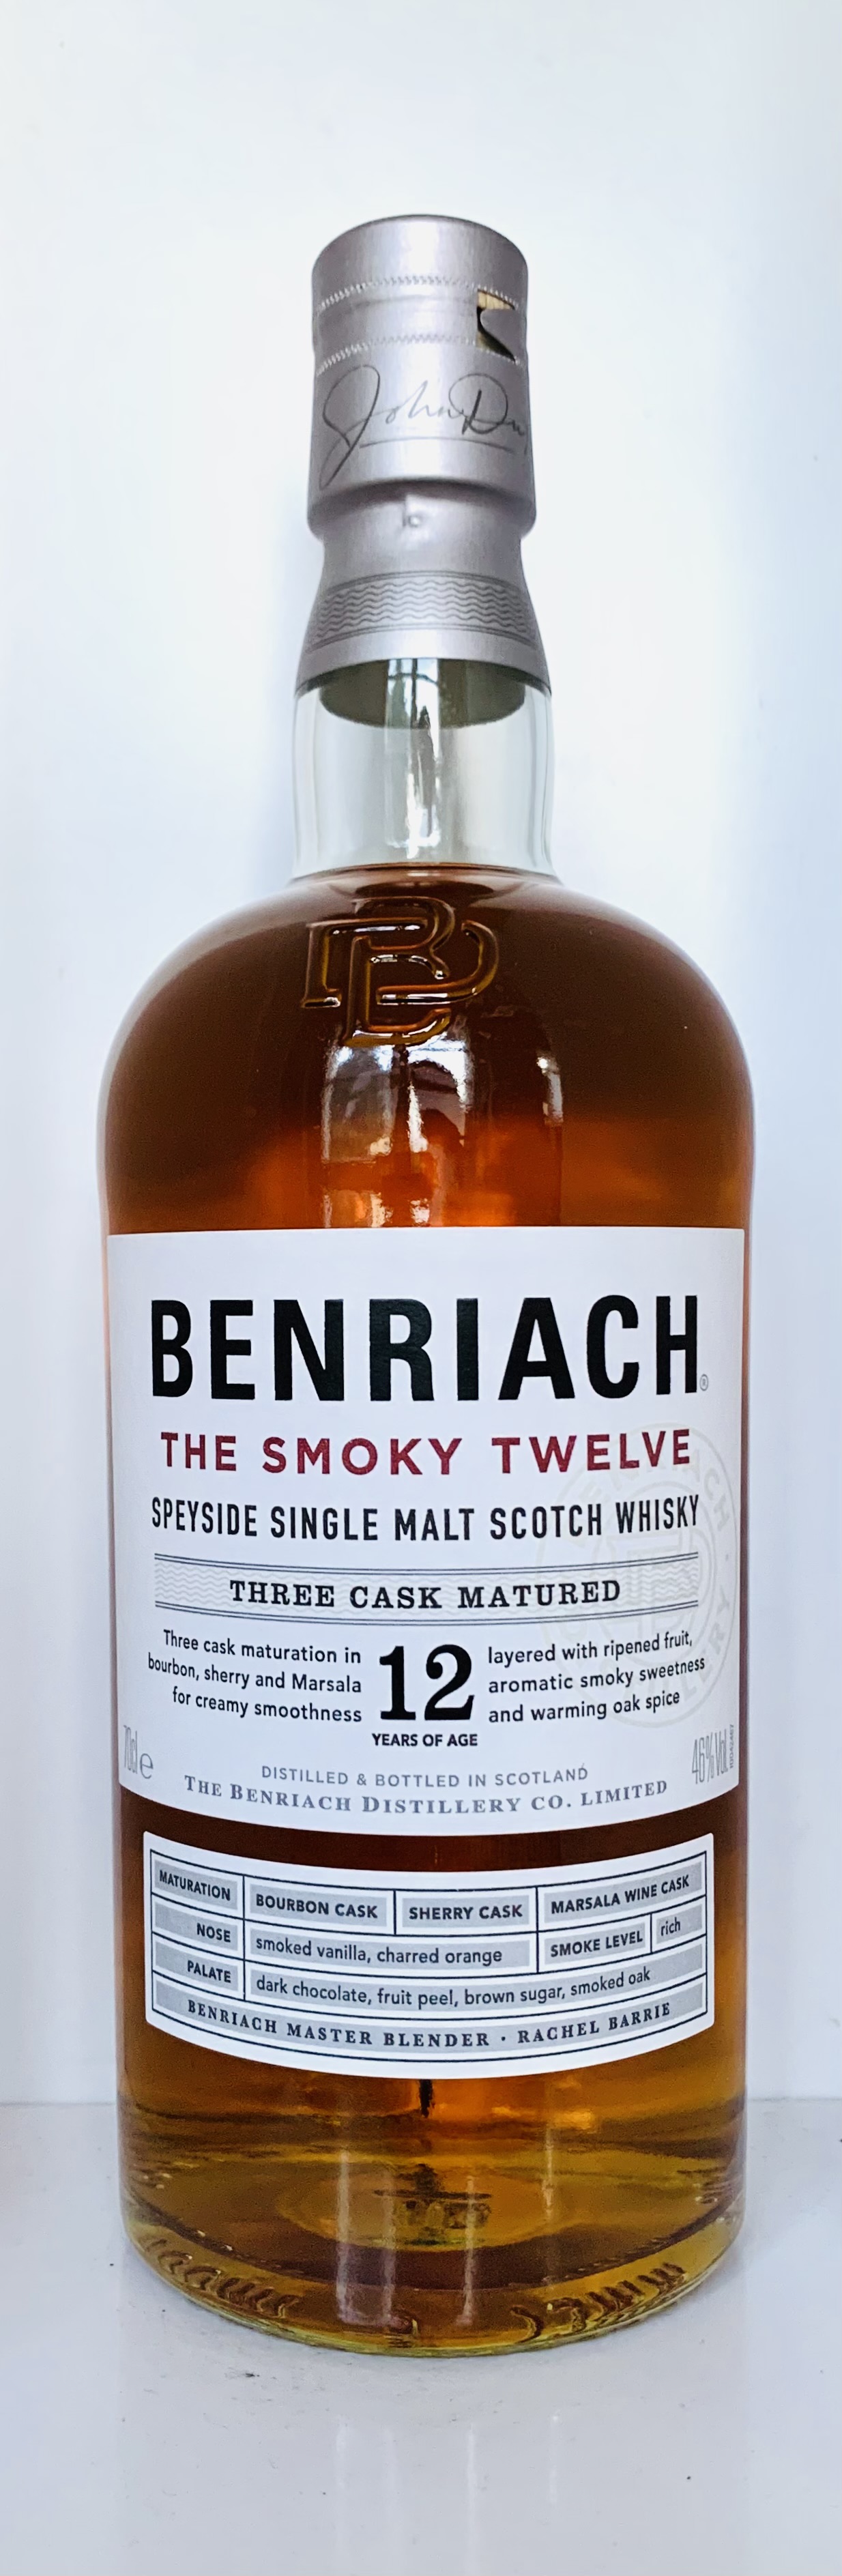 Benriach 12 Jahre The Smoky Twelve